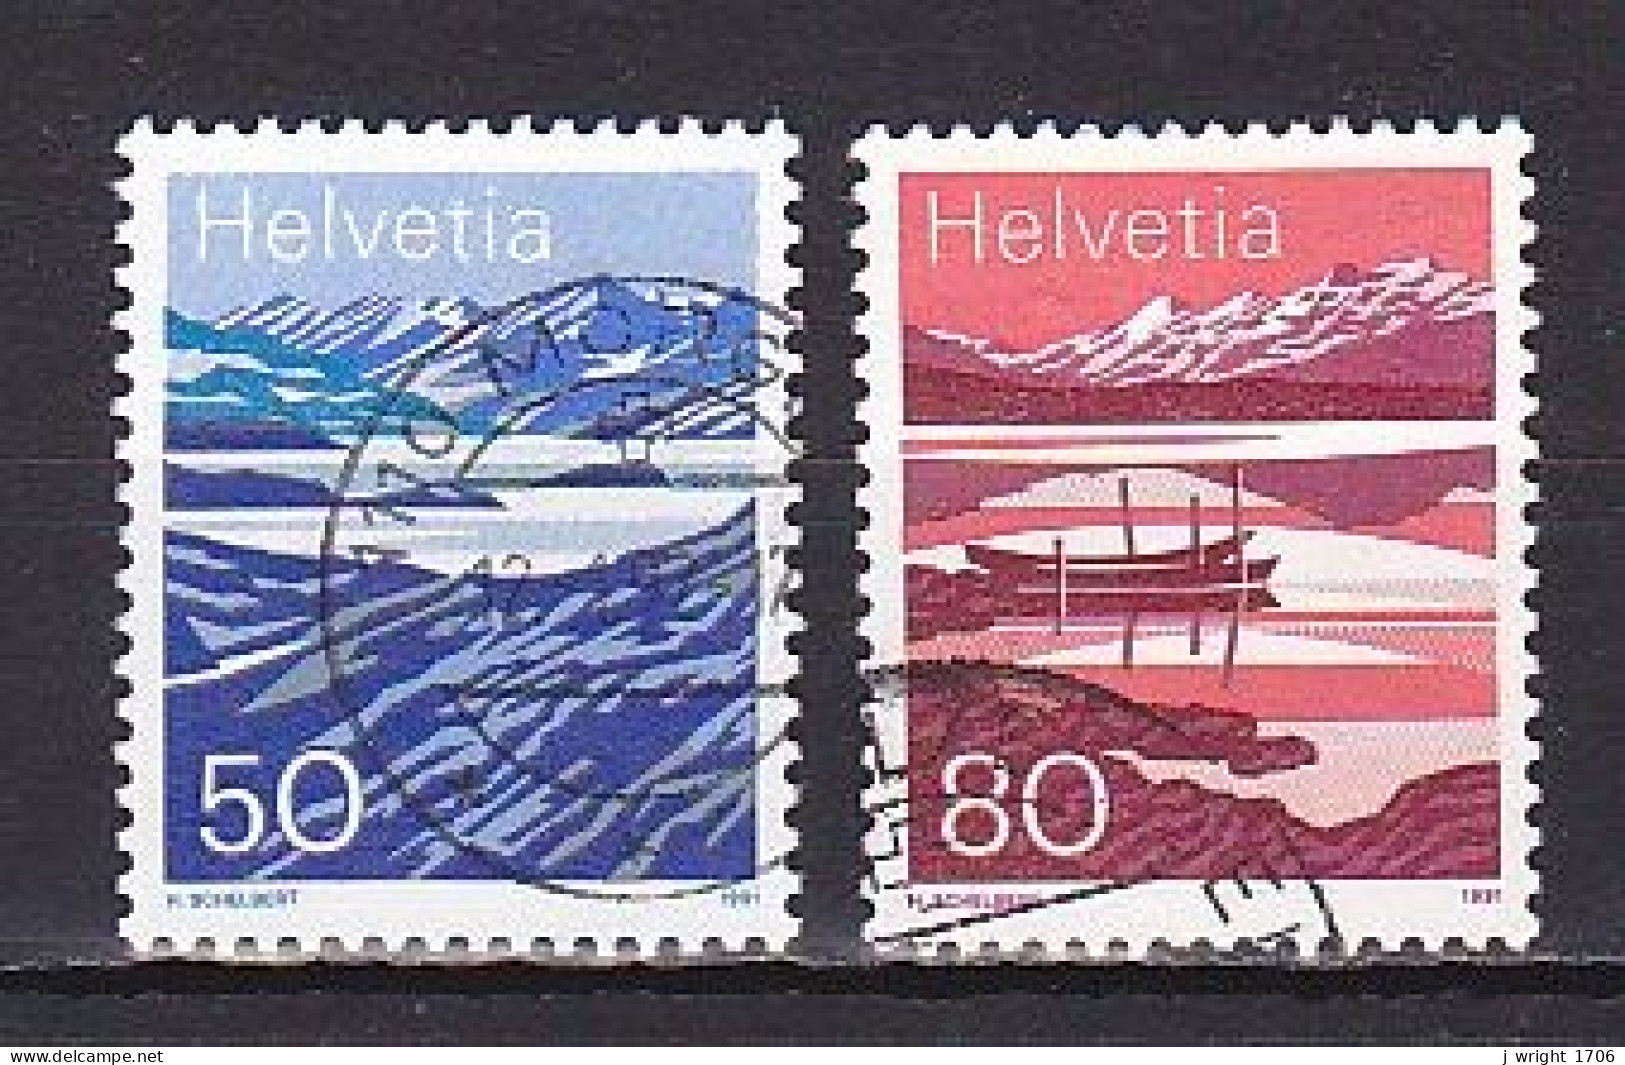 Switzerland, 1991, Lake Moesola & Melchsee, 50c & 80c, USED - Used Stamps